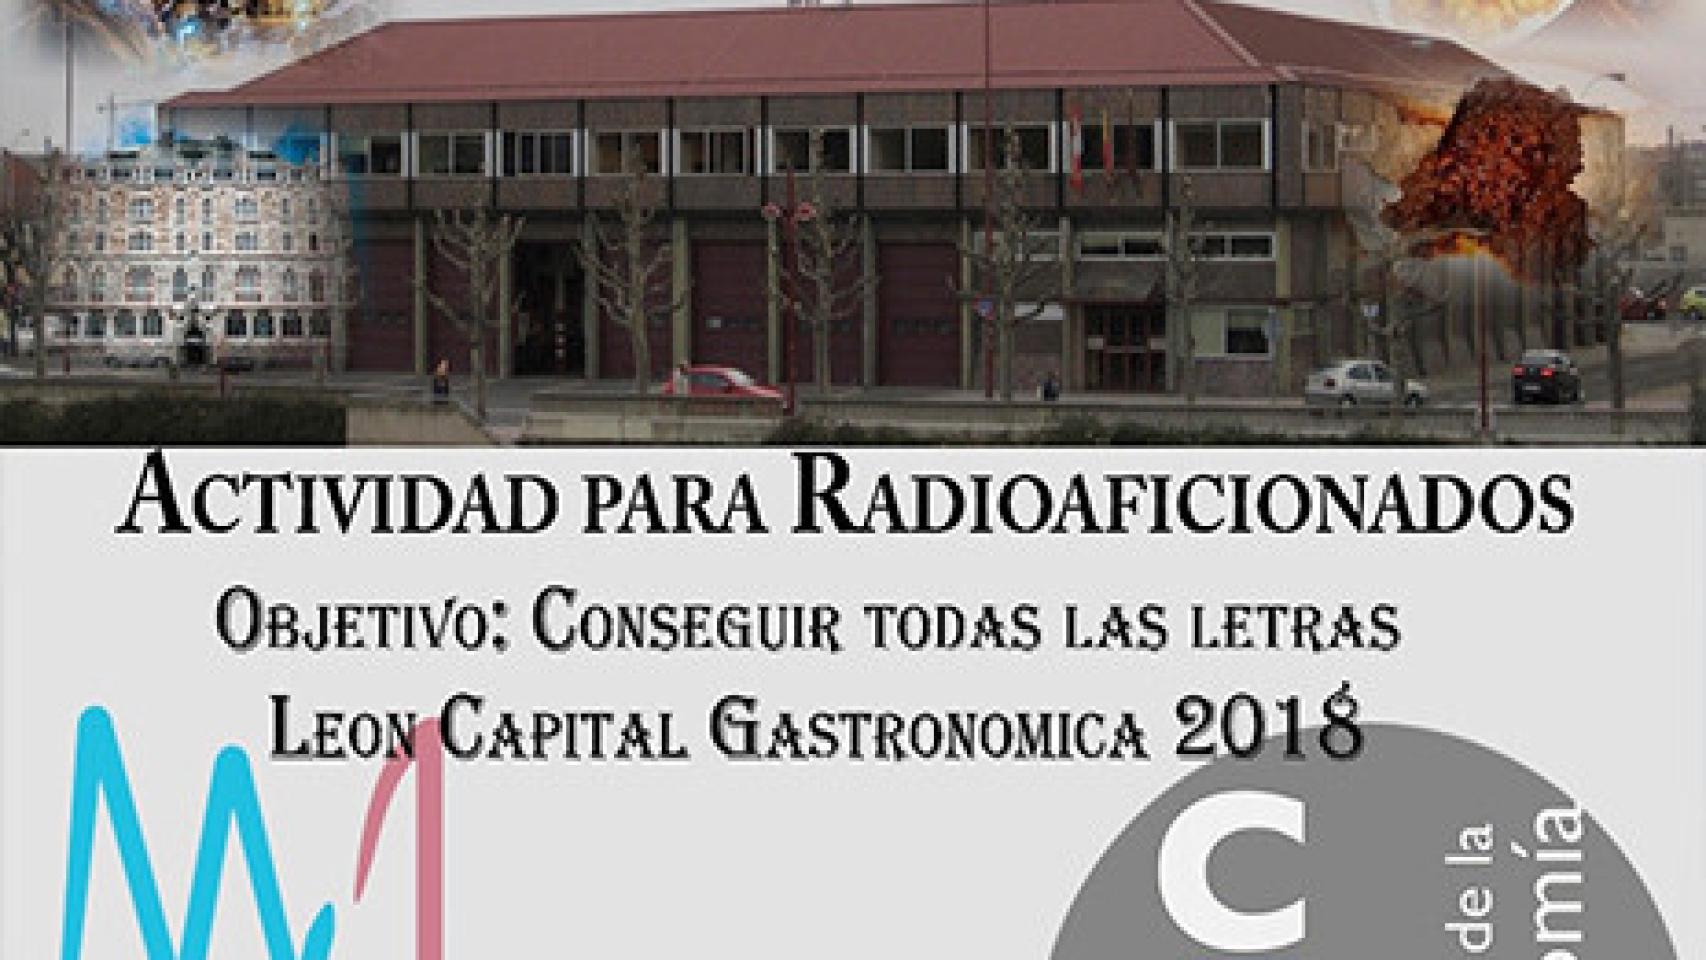 Leon-capitalidad-gastronomica-radio